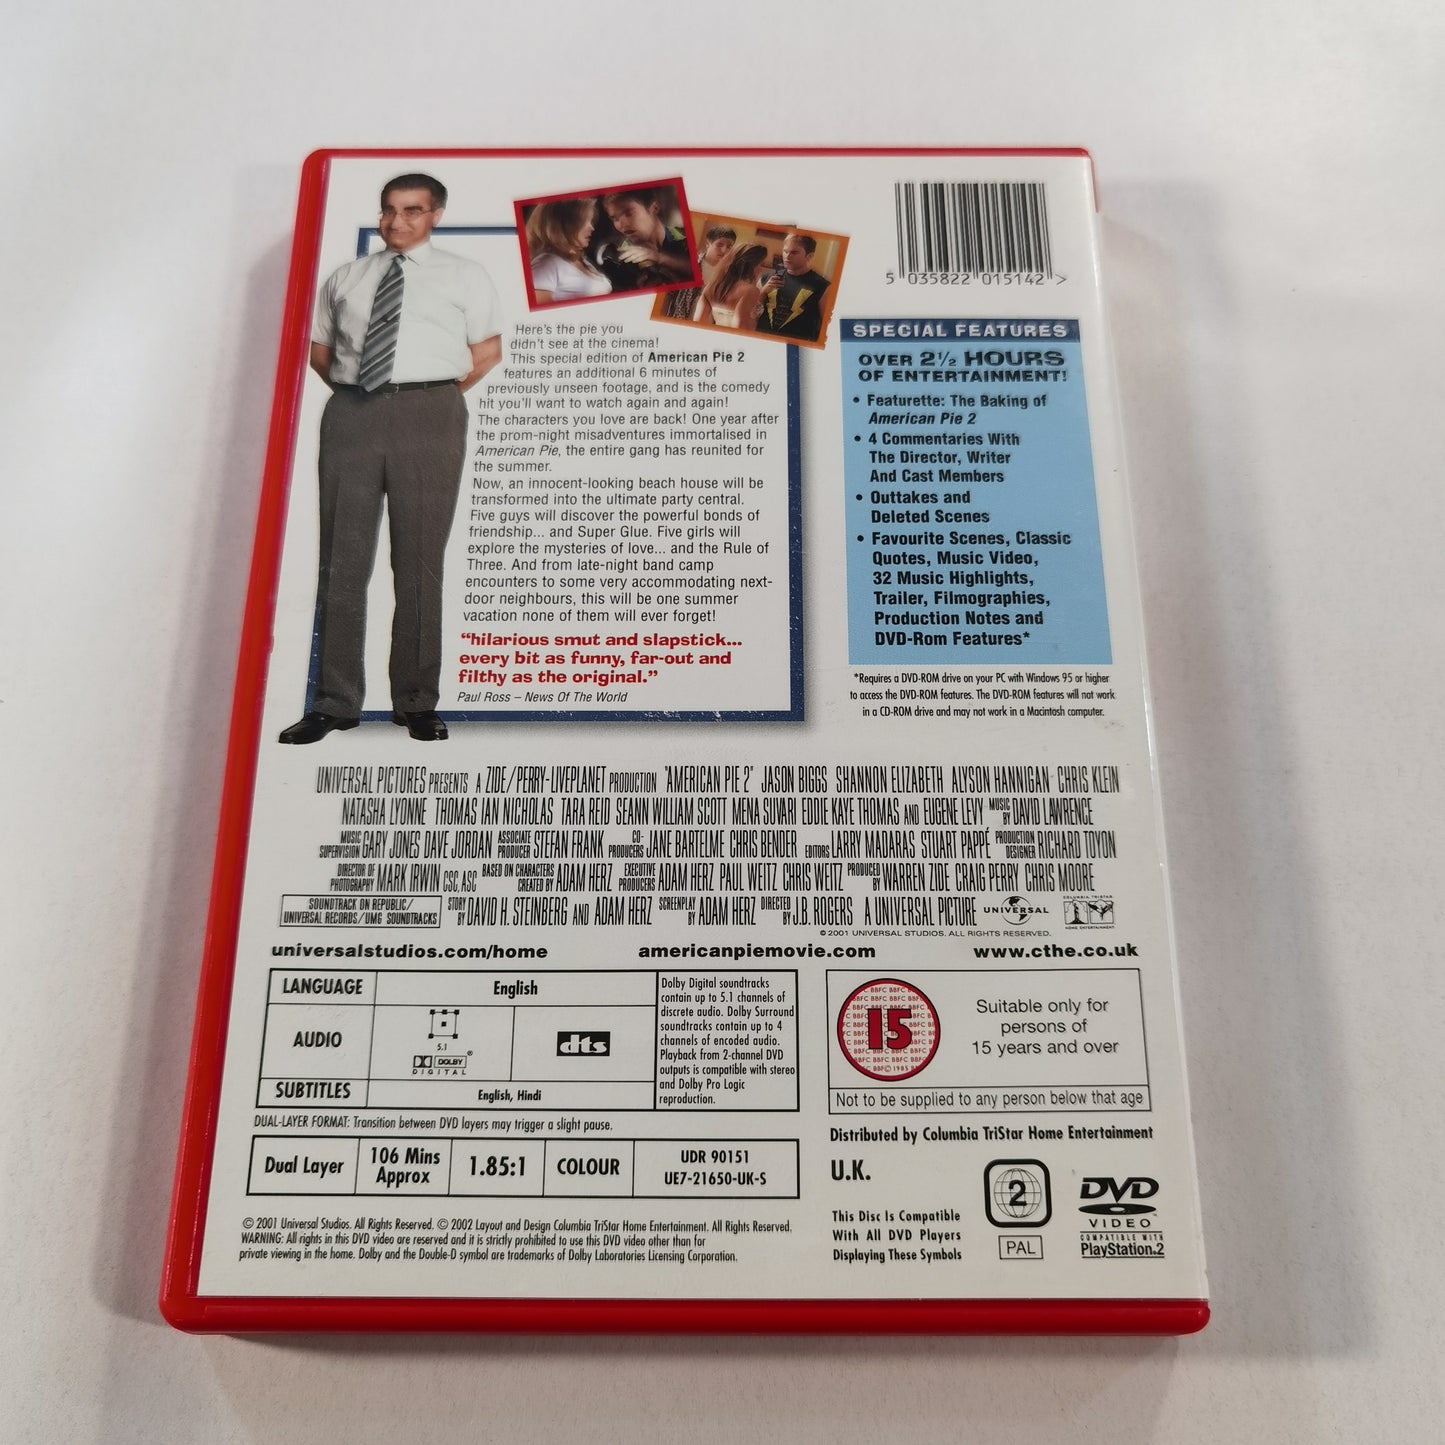 American Pie 2 (2001) - DVD 5035822015142